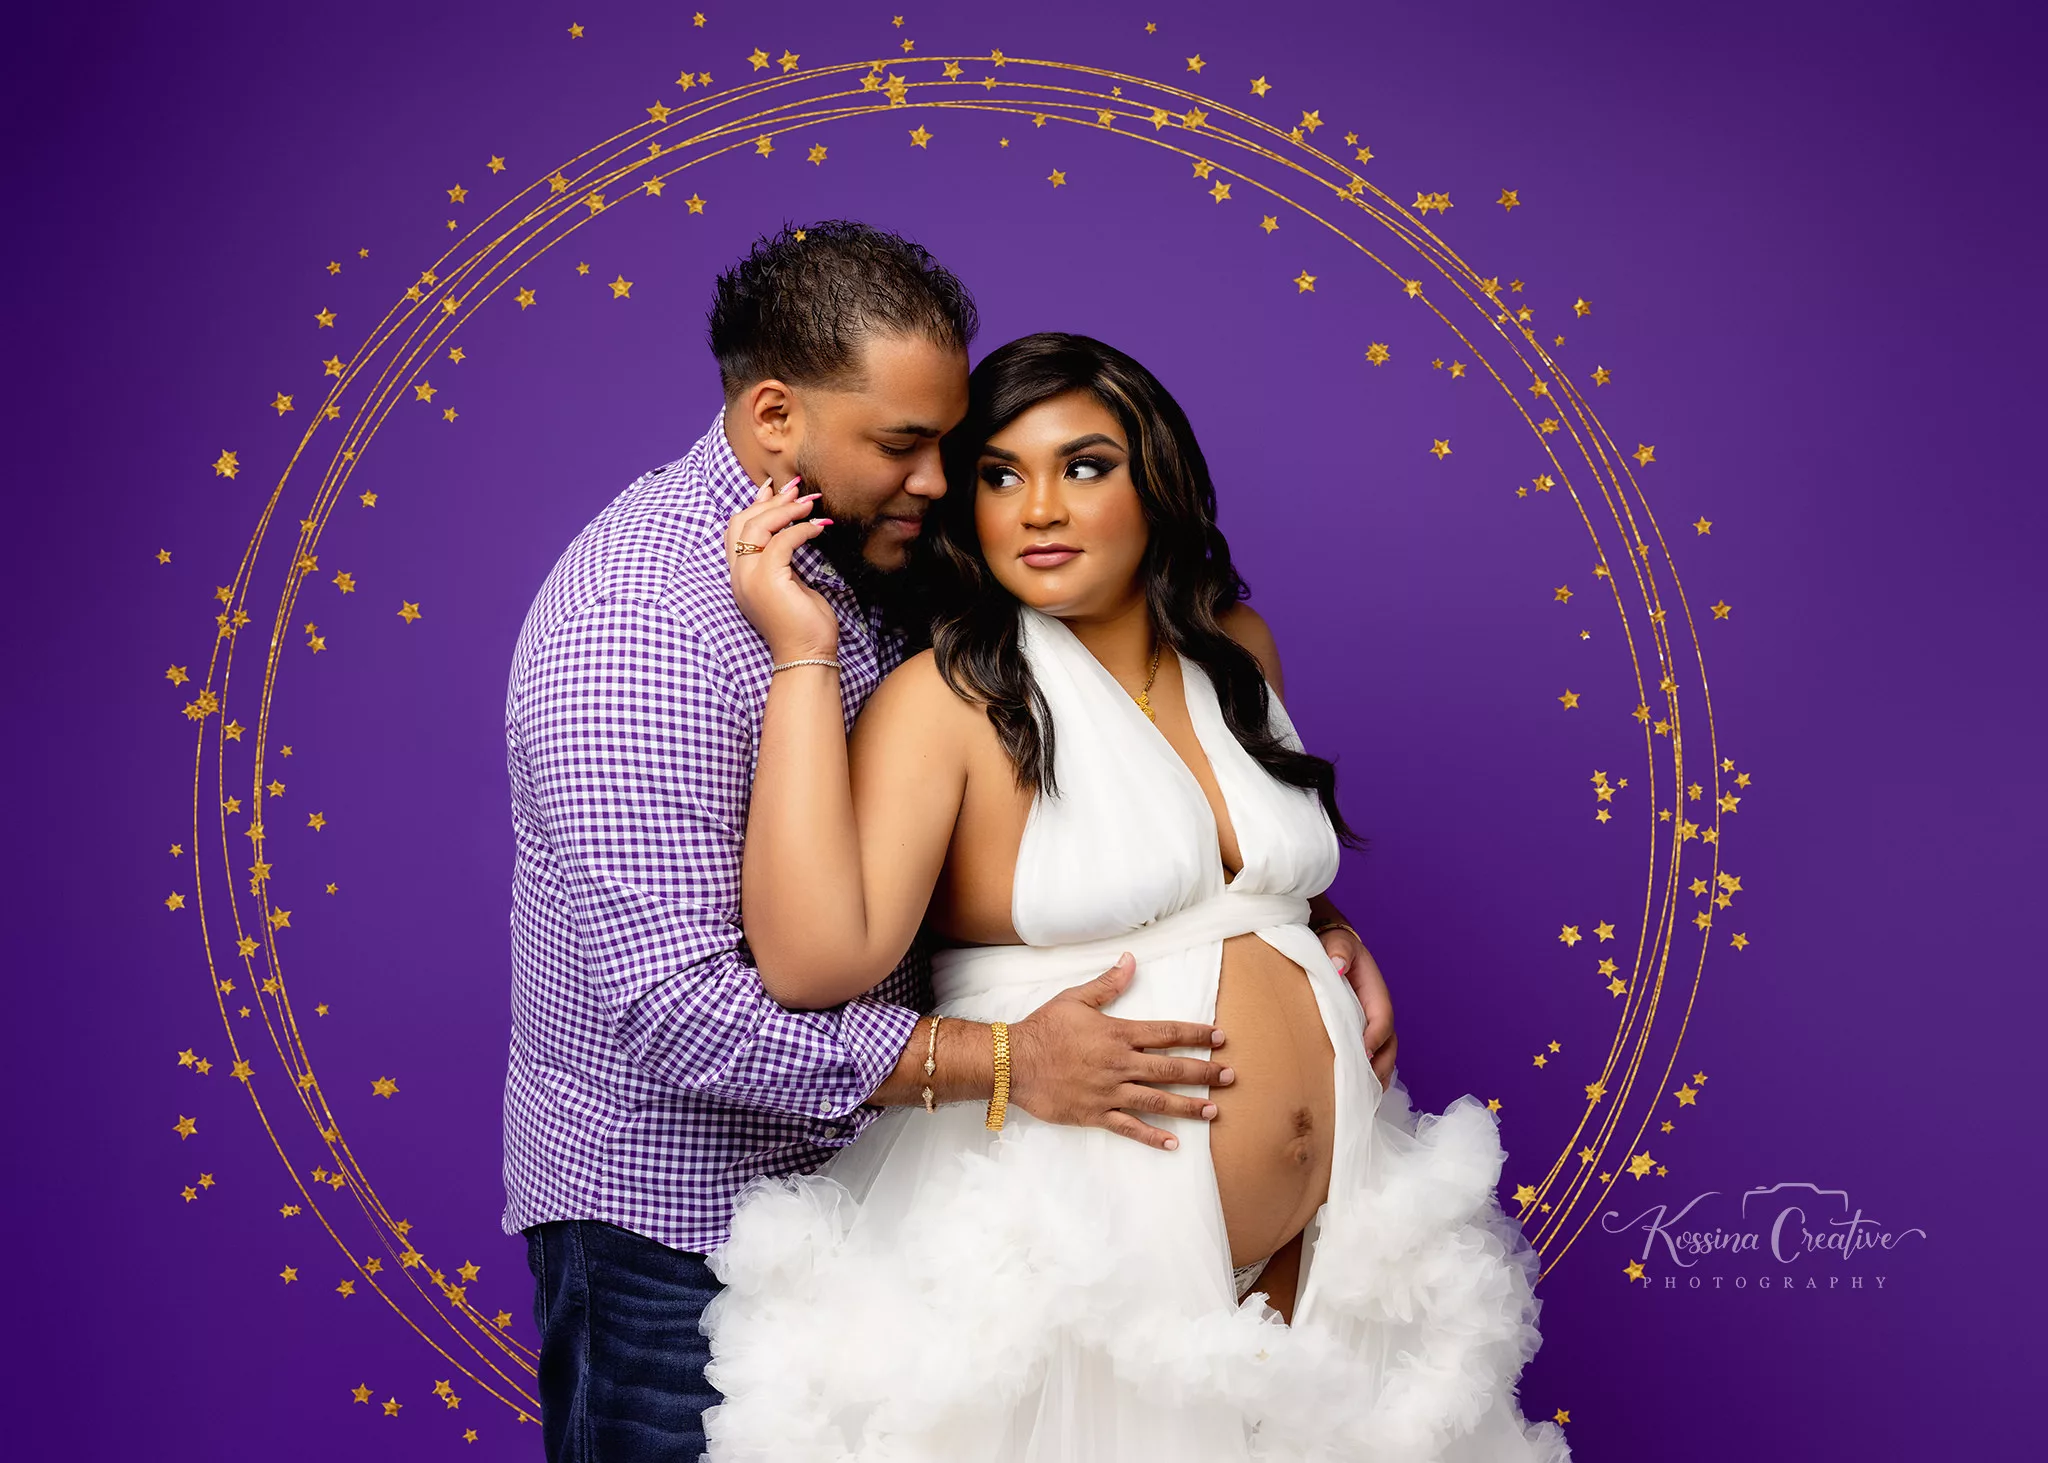 Orlando Maternity Photographer Photo Studio couples maternity with stars and purple background